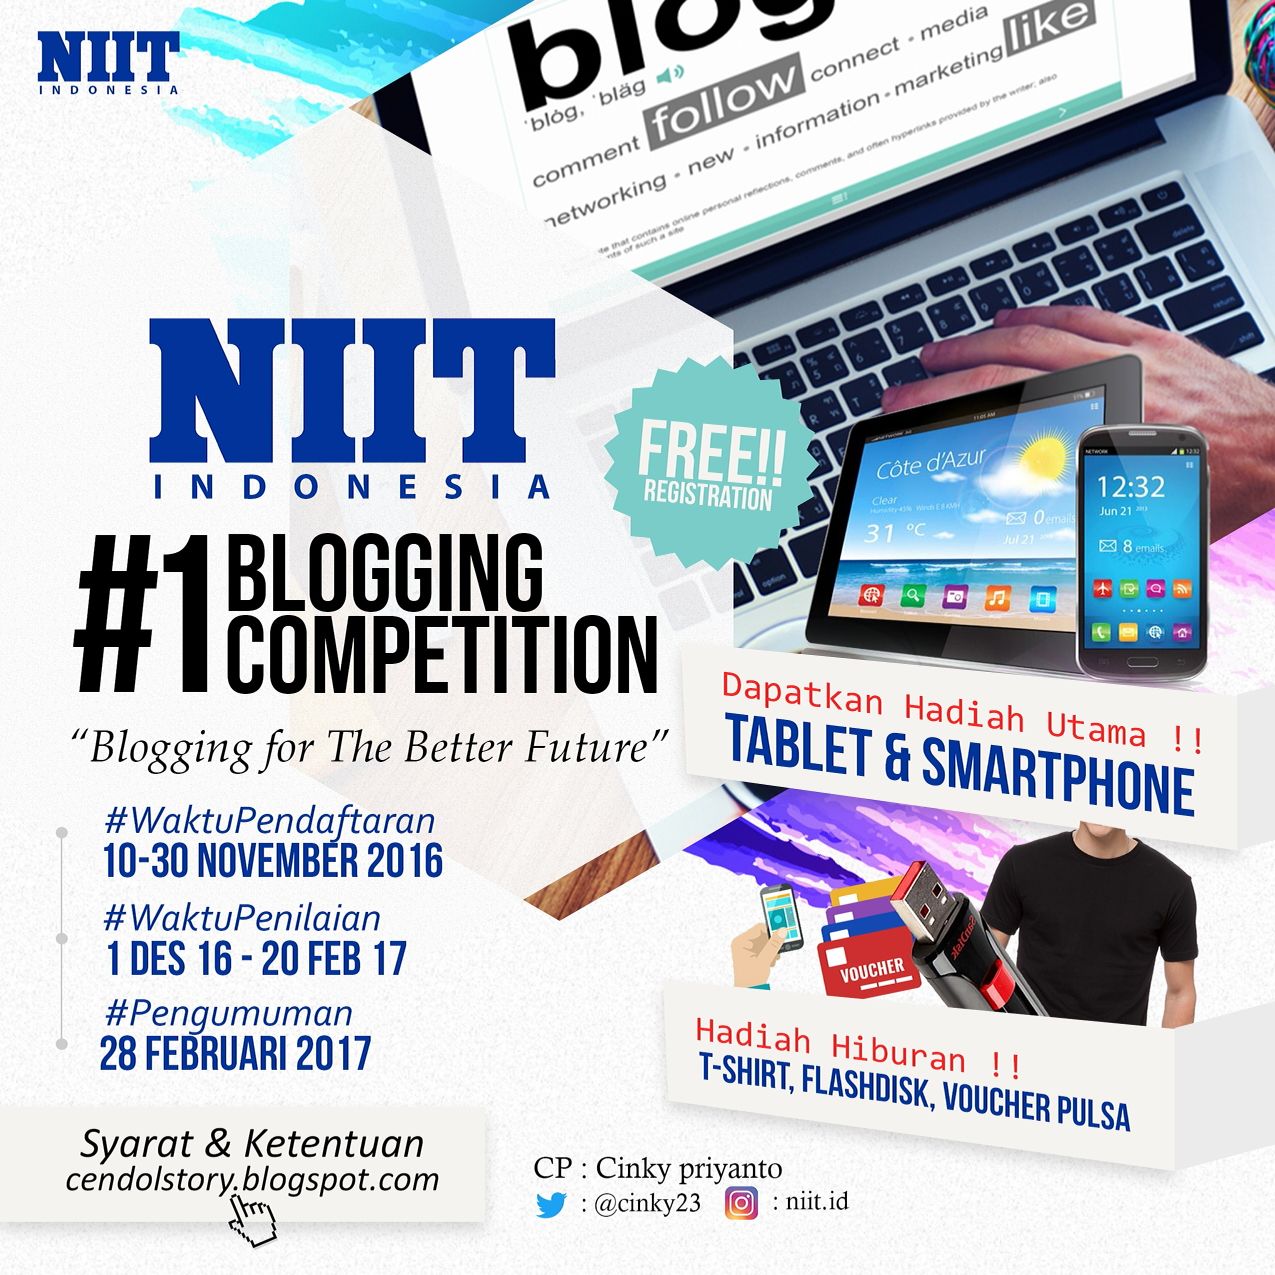 NIIT Indonesia #1 Blogging Competition